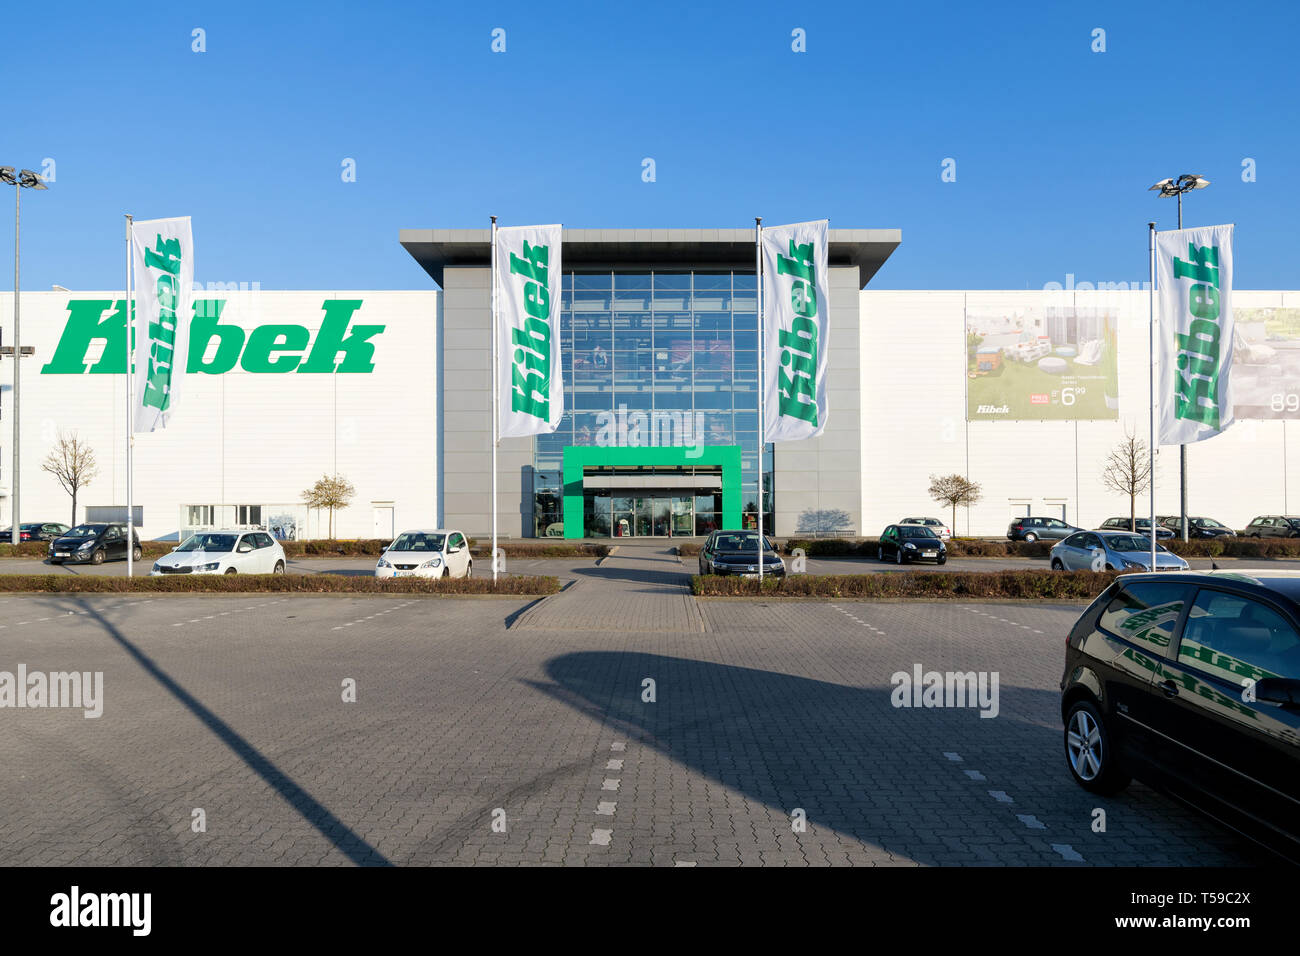 Kibek store in Elmshorn, Germany. Teppich Kibek GmbH is one of the largest  German distributors of carpets Stock Photo - Alamy